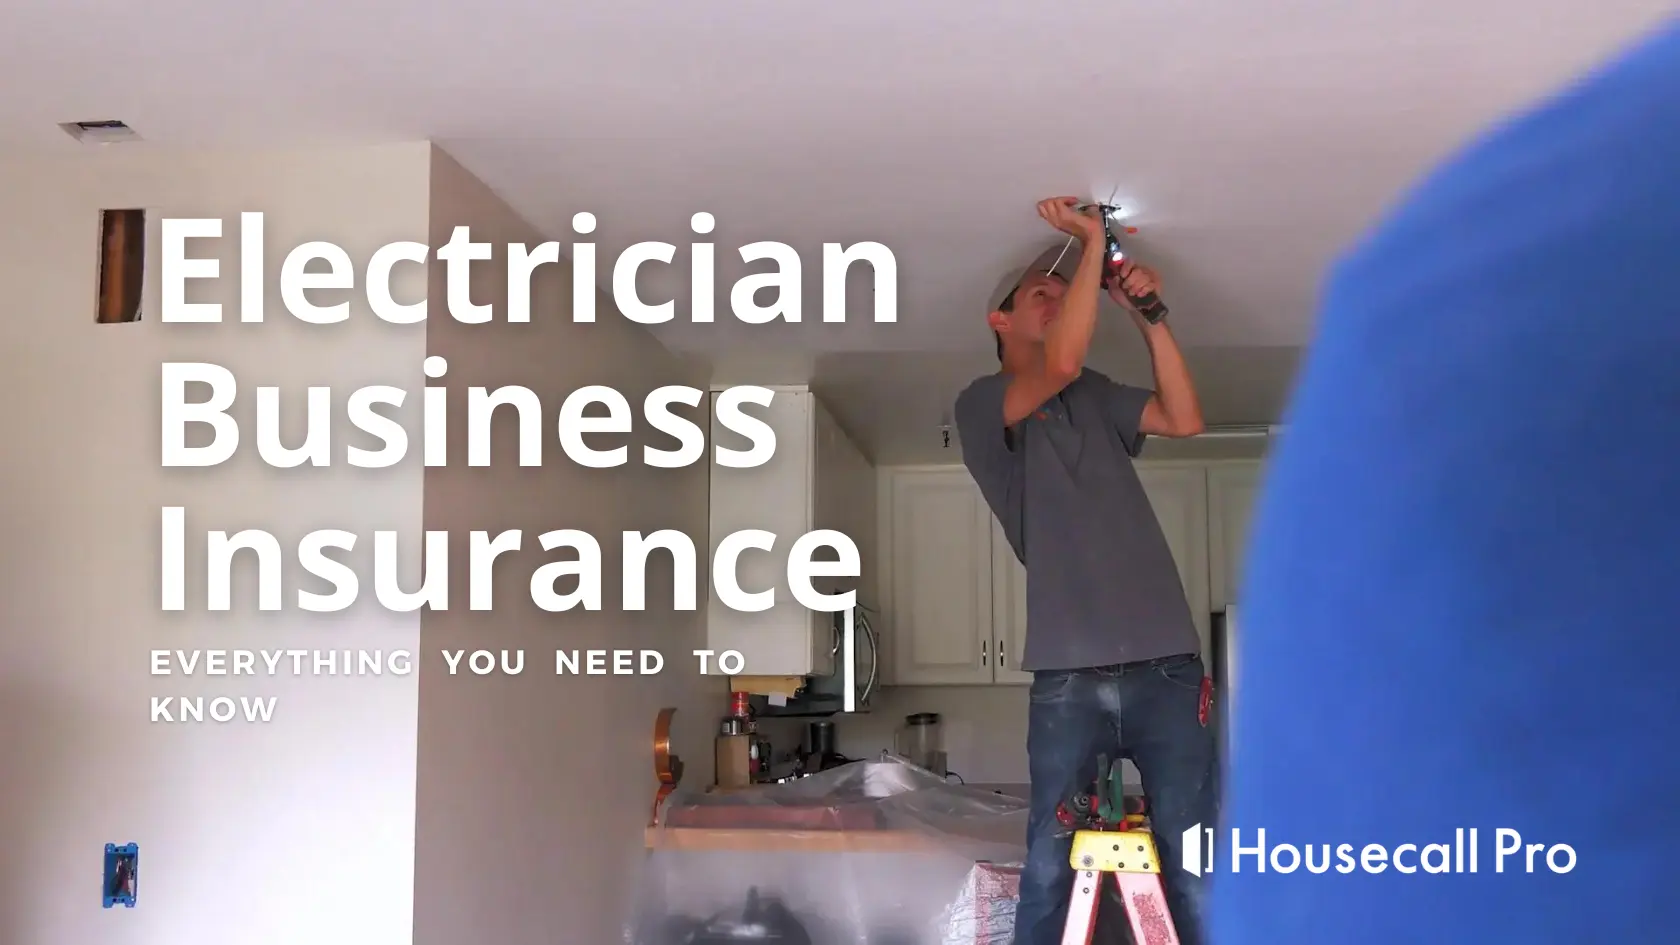 Electrician business insurance blog banner